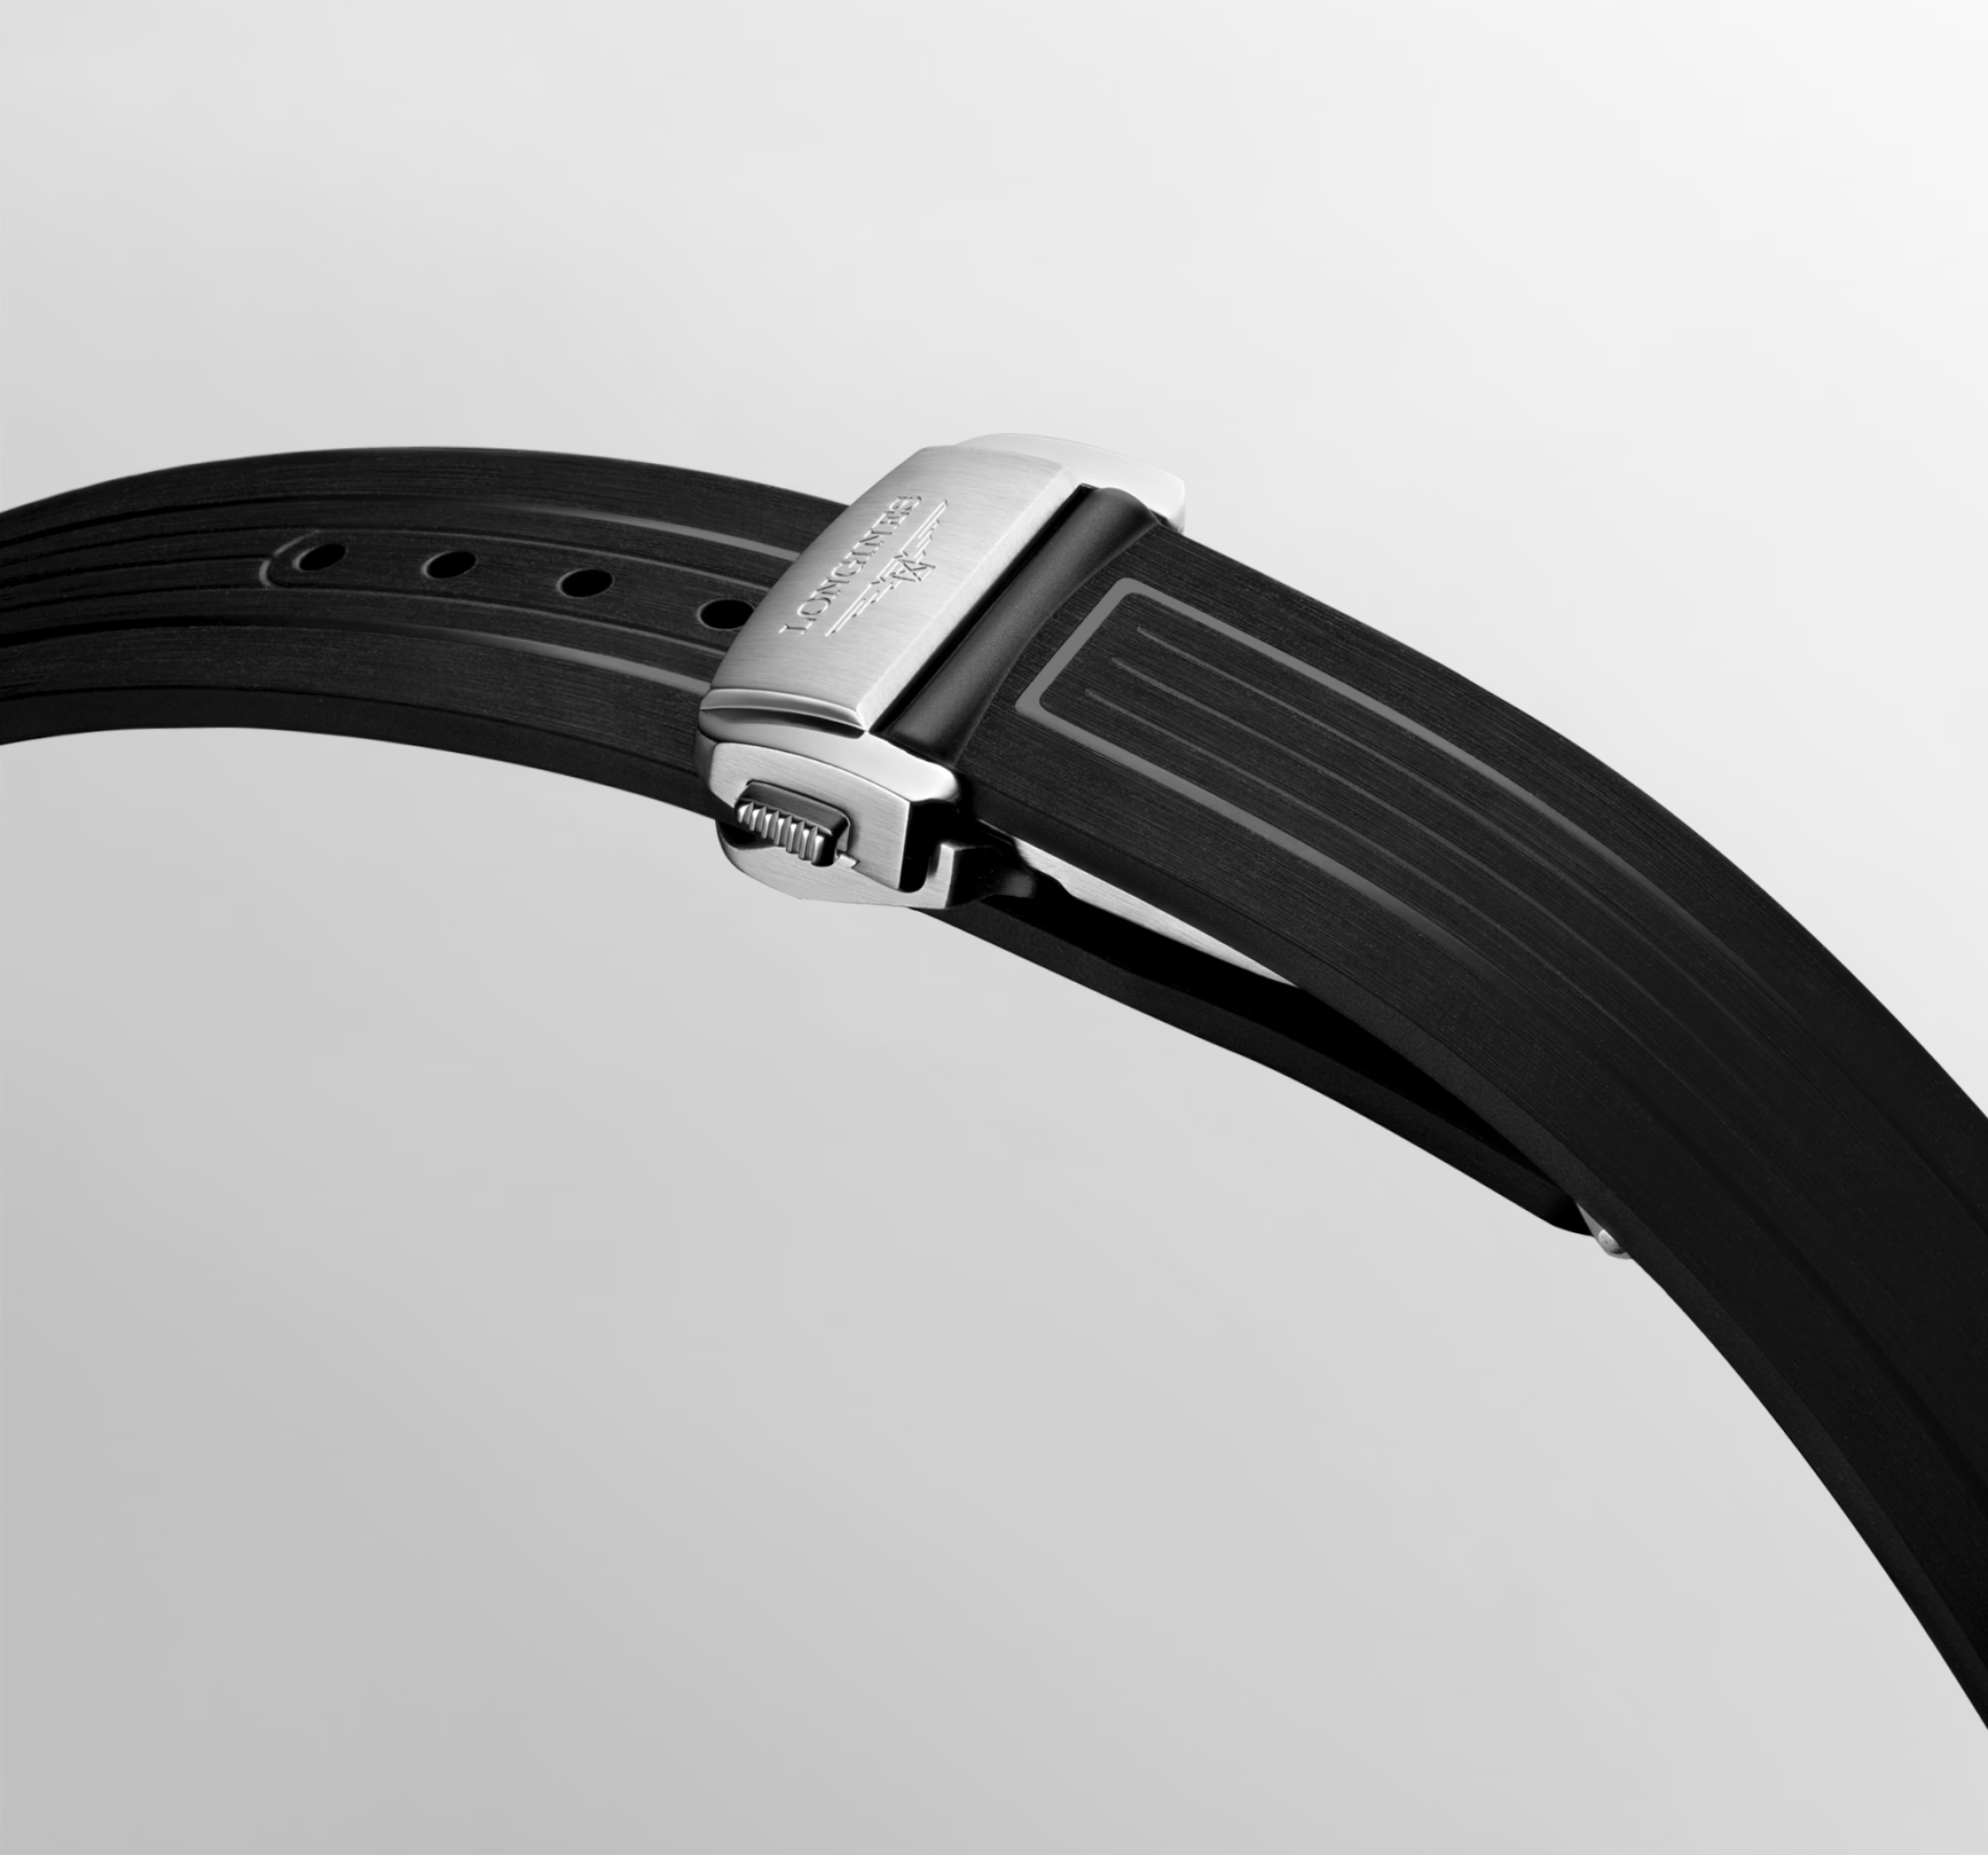 Longines HydroConquest GMT 41mm Black Rubber Men's Watch L37904569